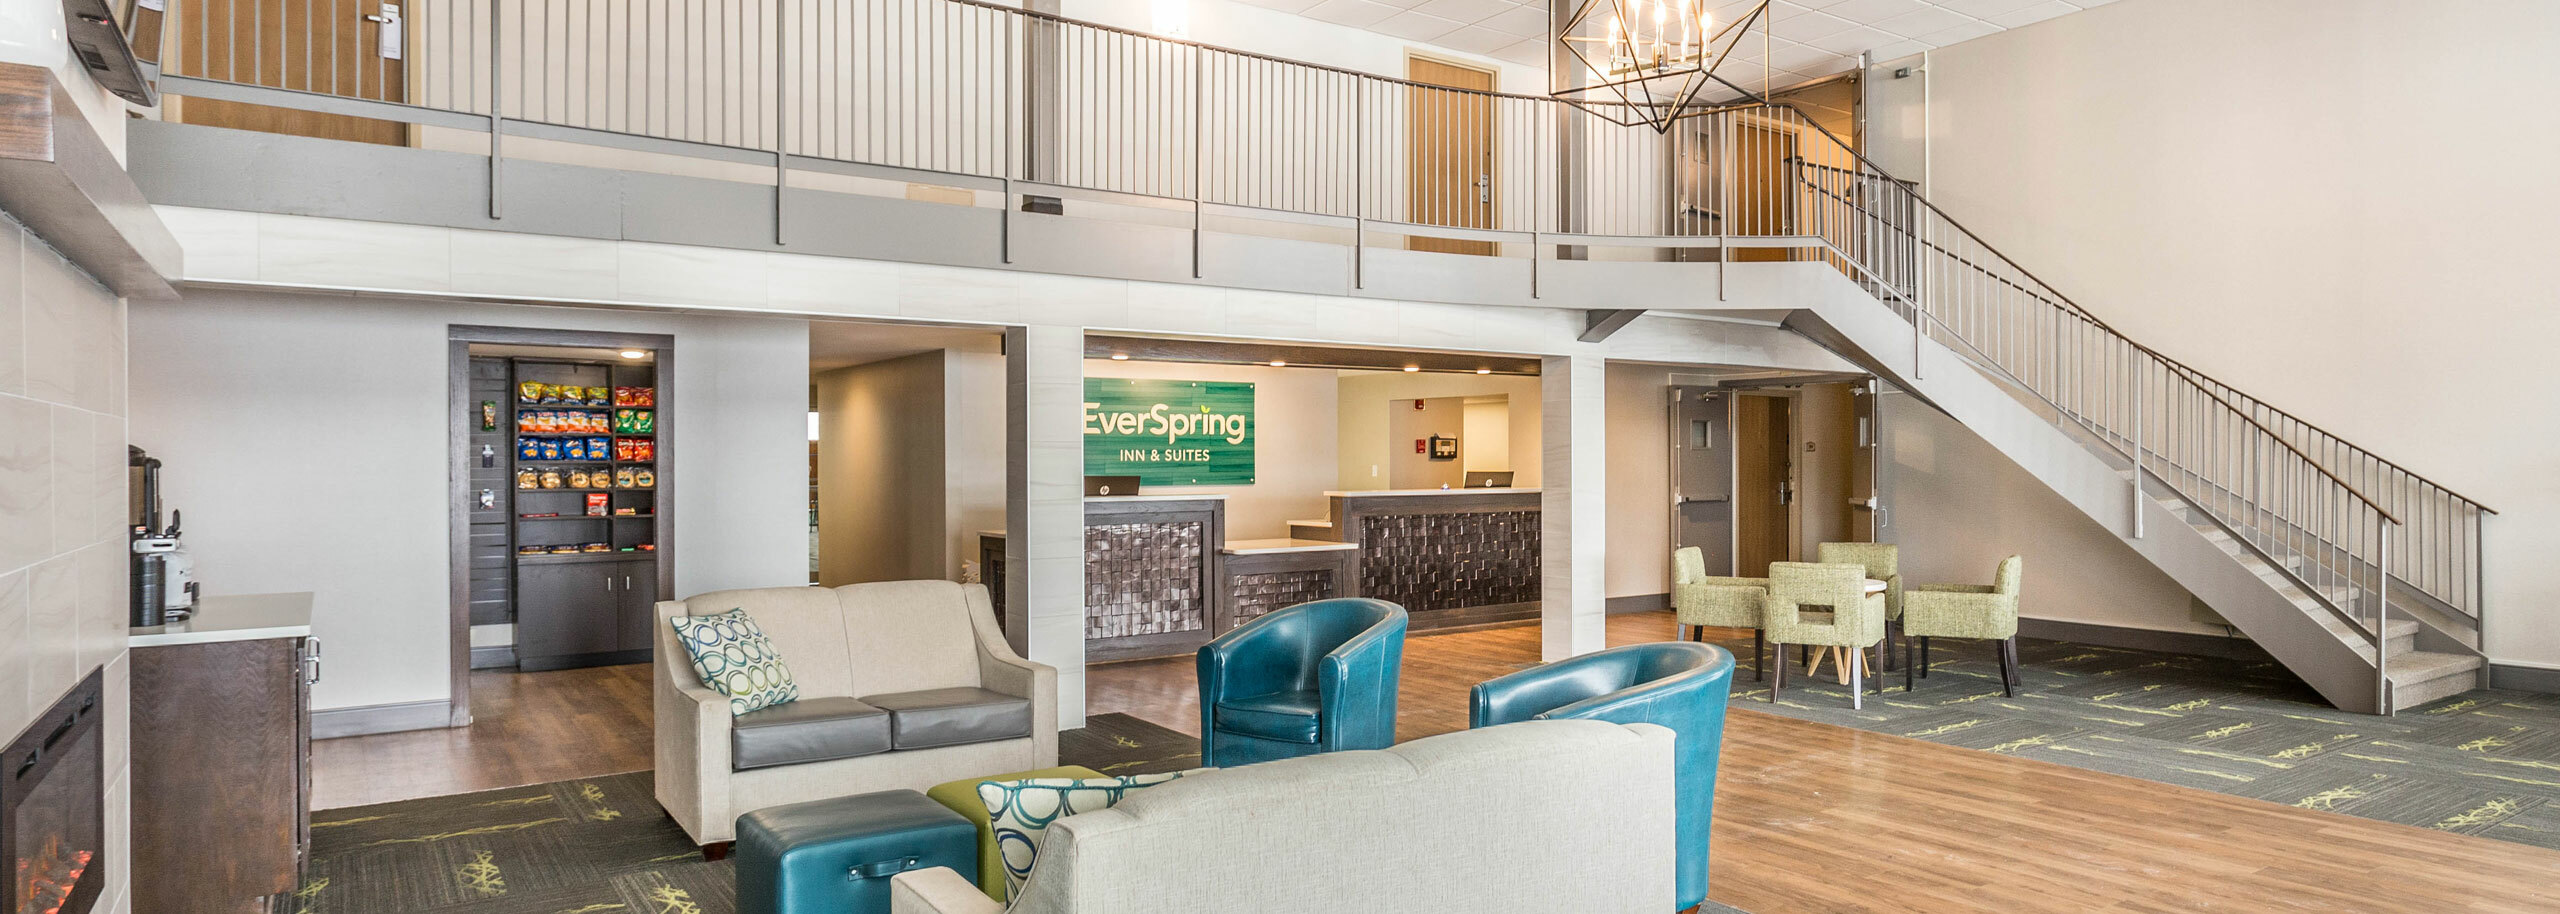 Photo of The Everspring Inn & Suites - Marshall, Marshall, MN